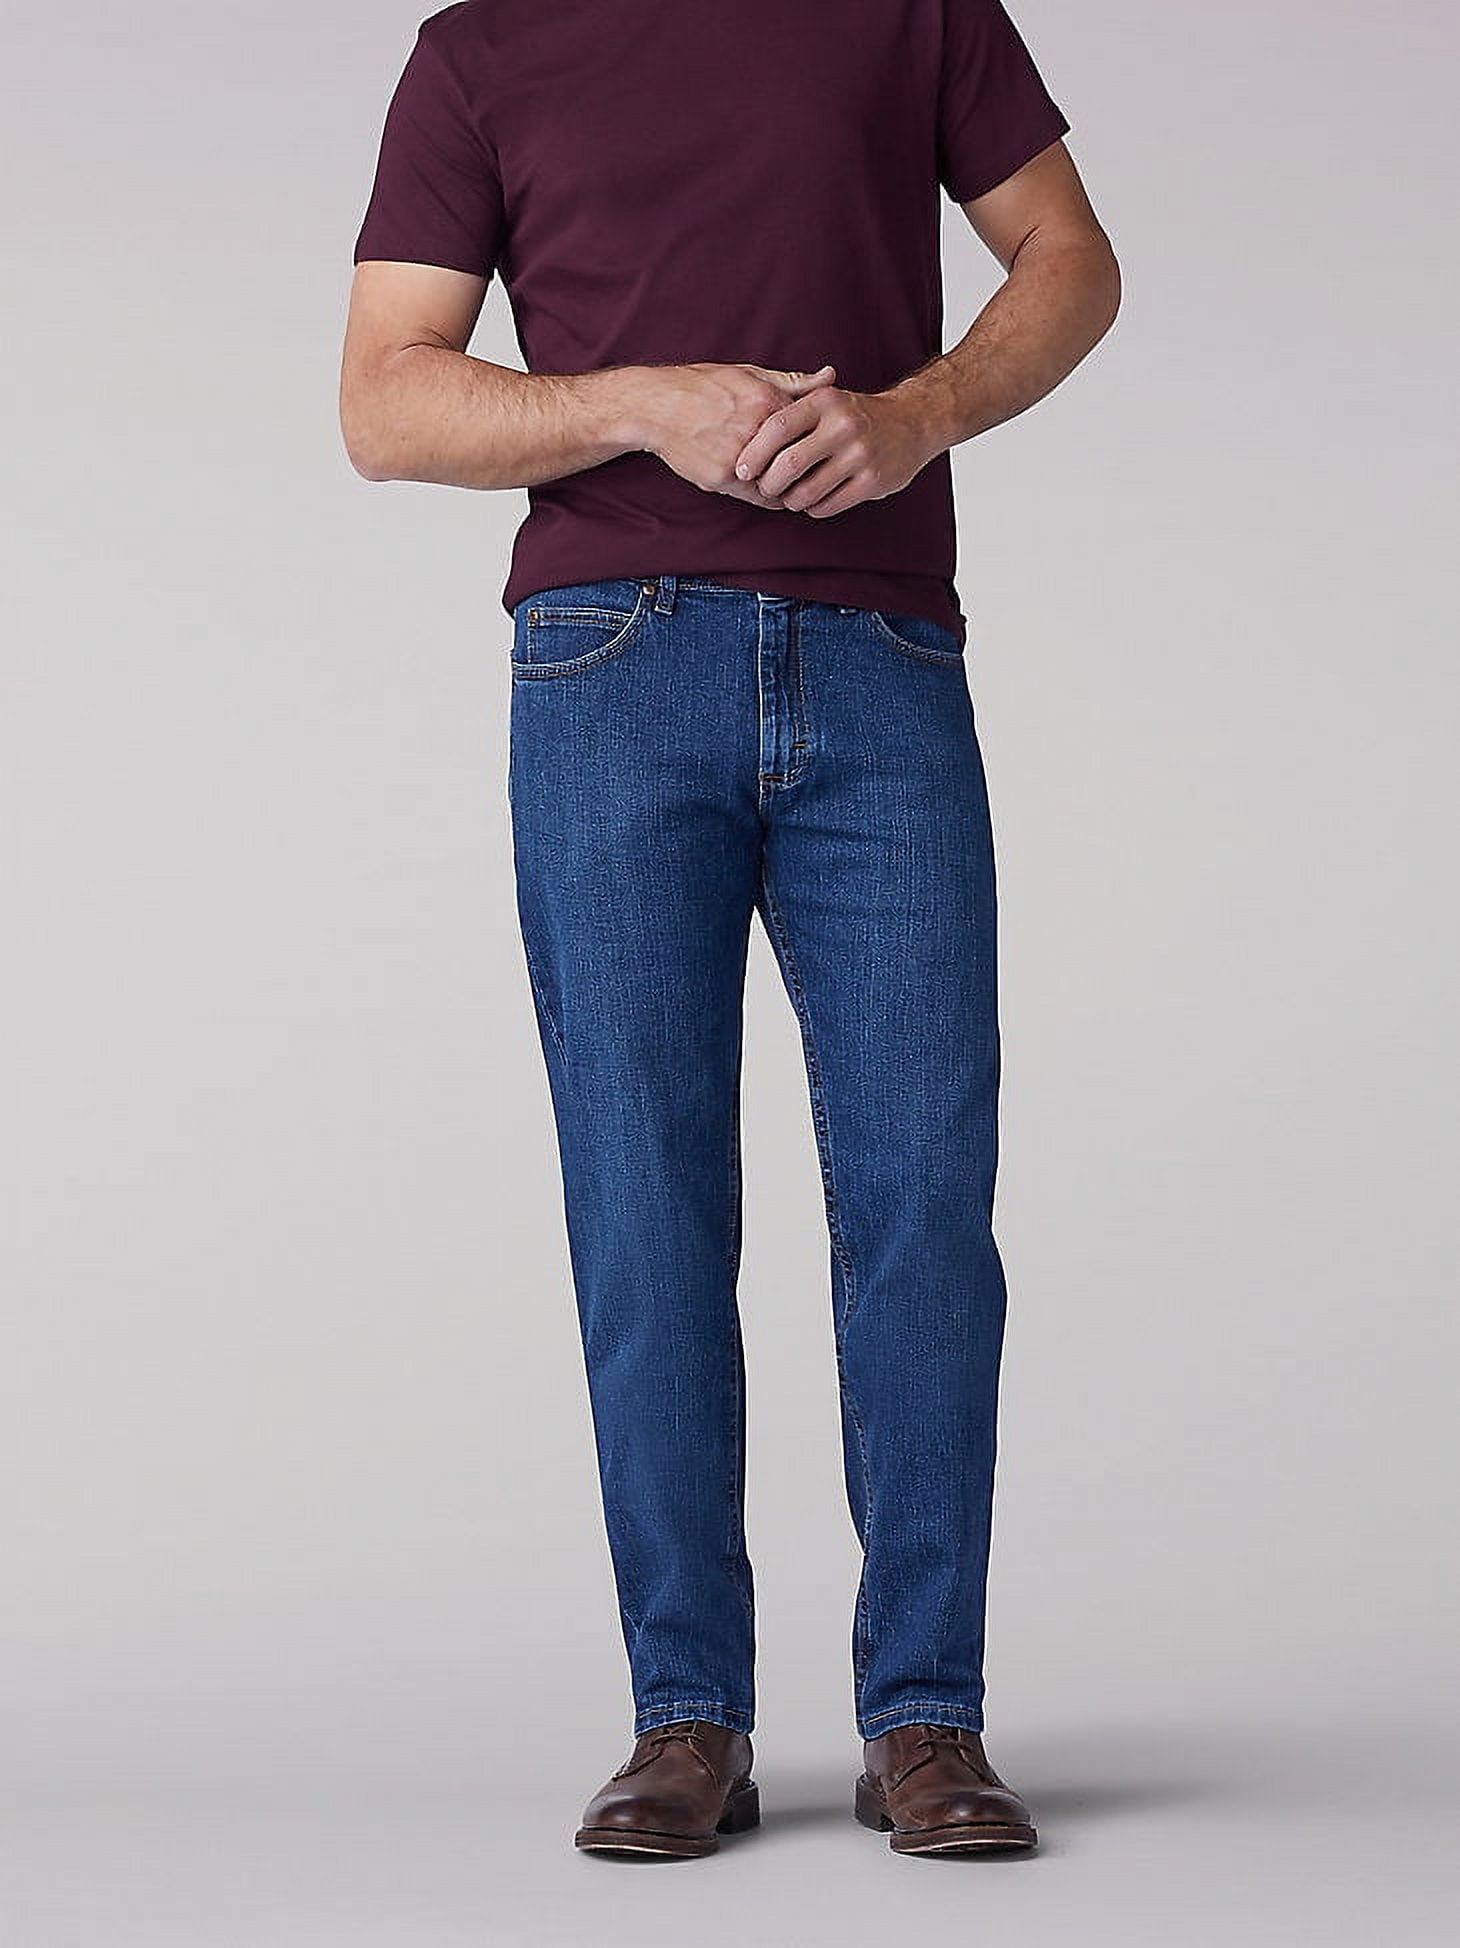 Mens Regular Fit Straight Leg Jeans in Patriot - Walmart.com